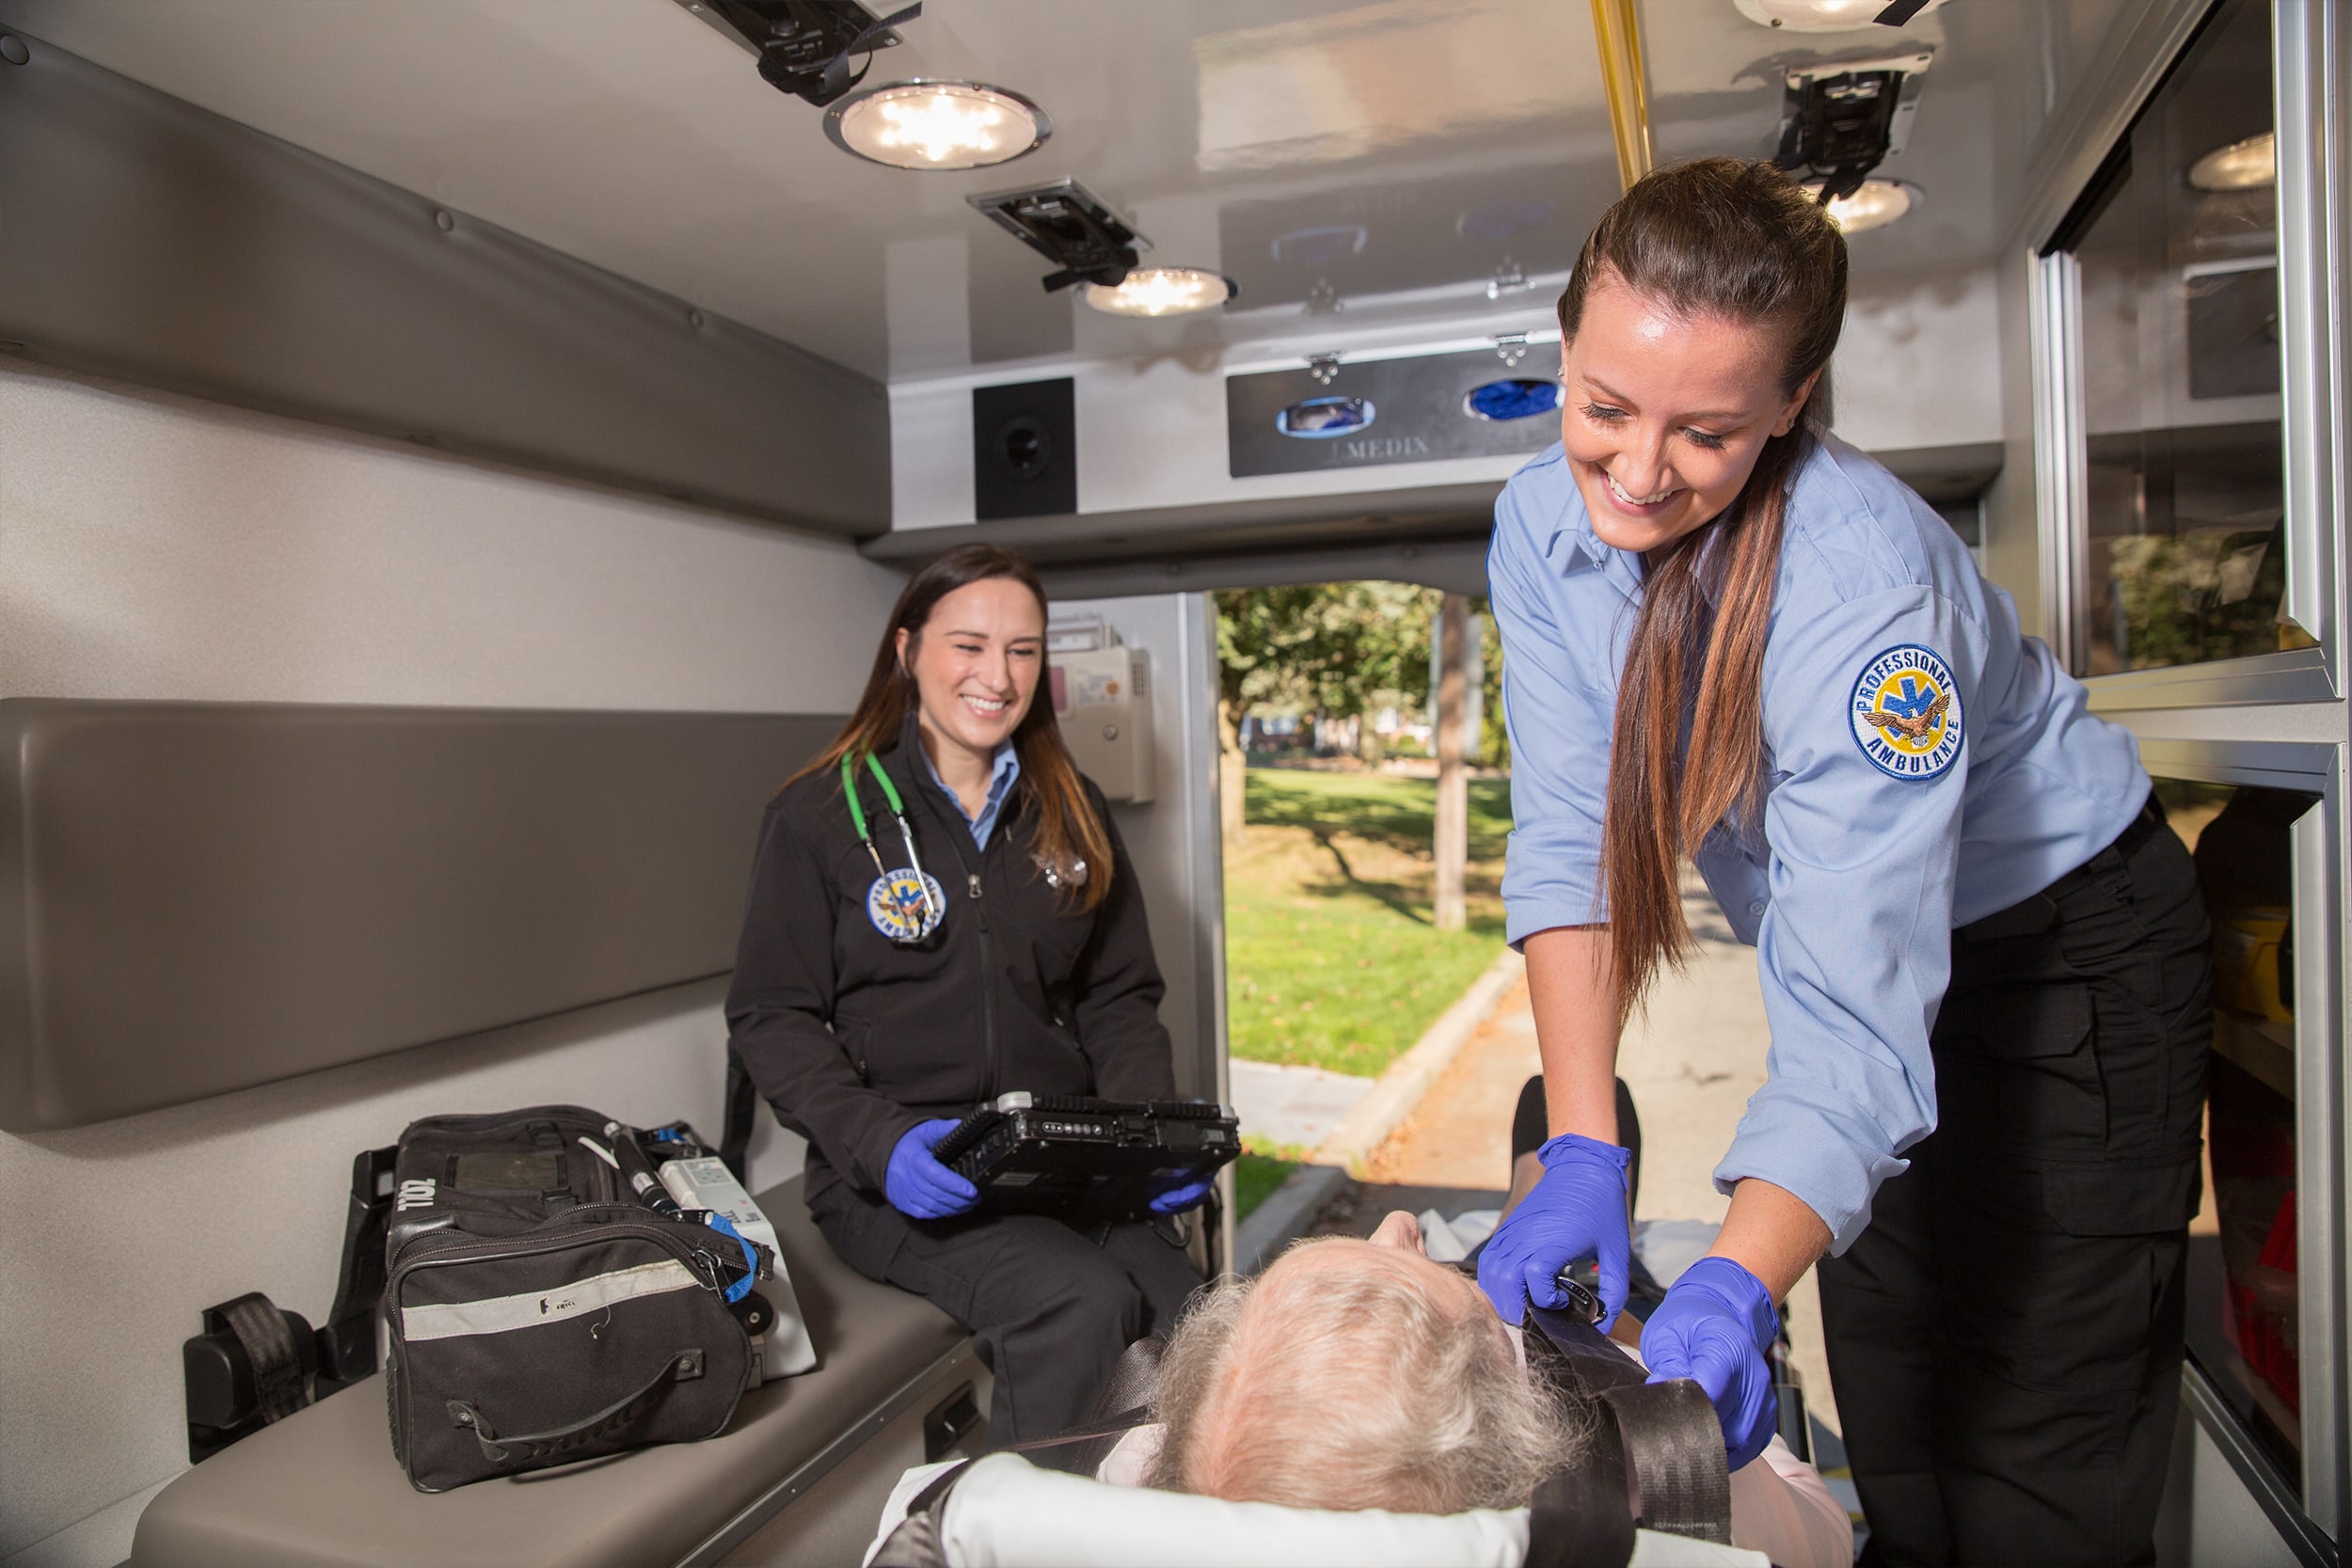 Two female EMTs helping elderly in Ambulance